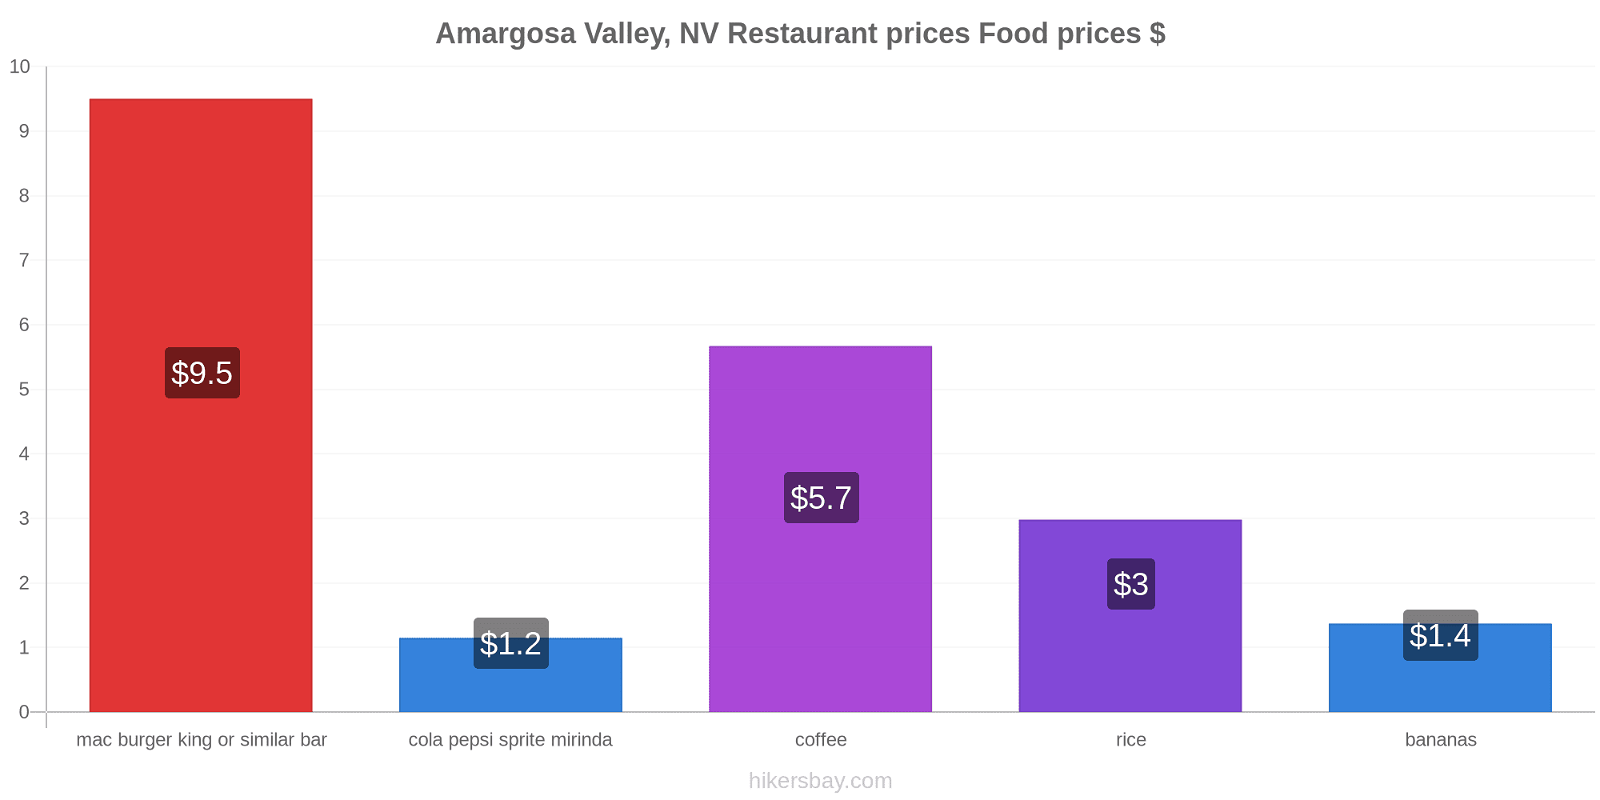 Amargosa Valley, NV price changes hikersbay.com